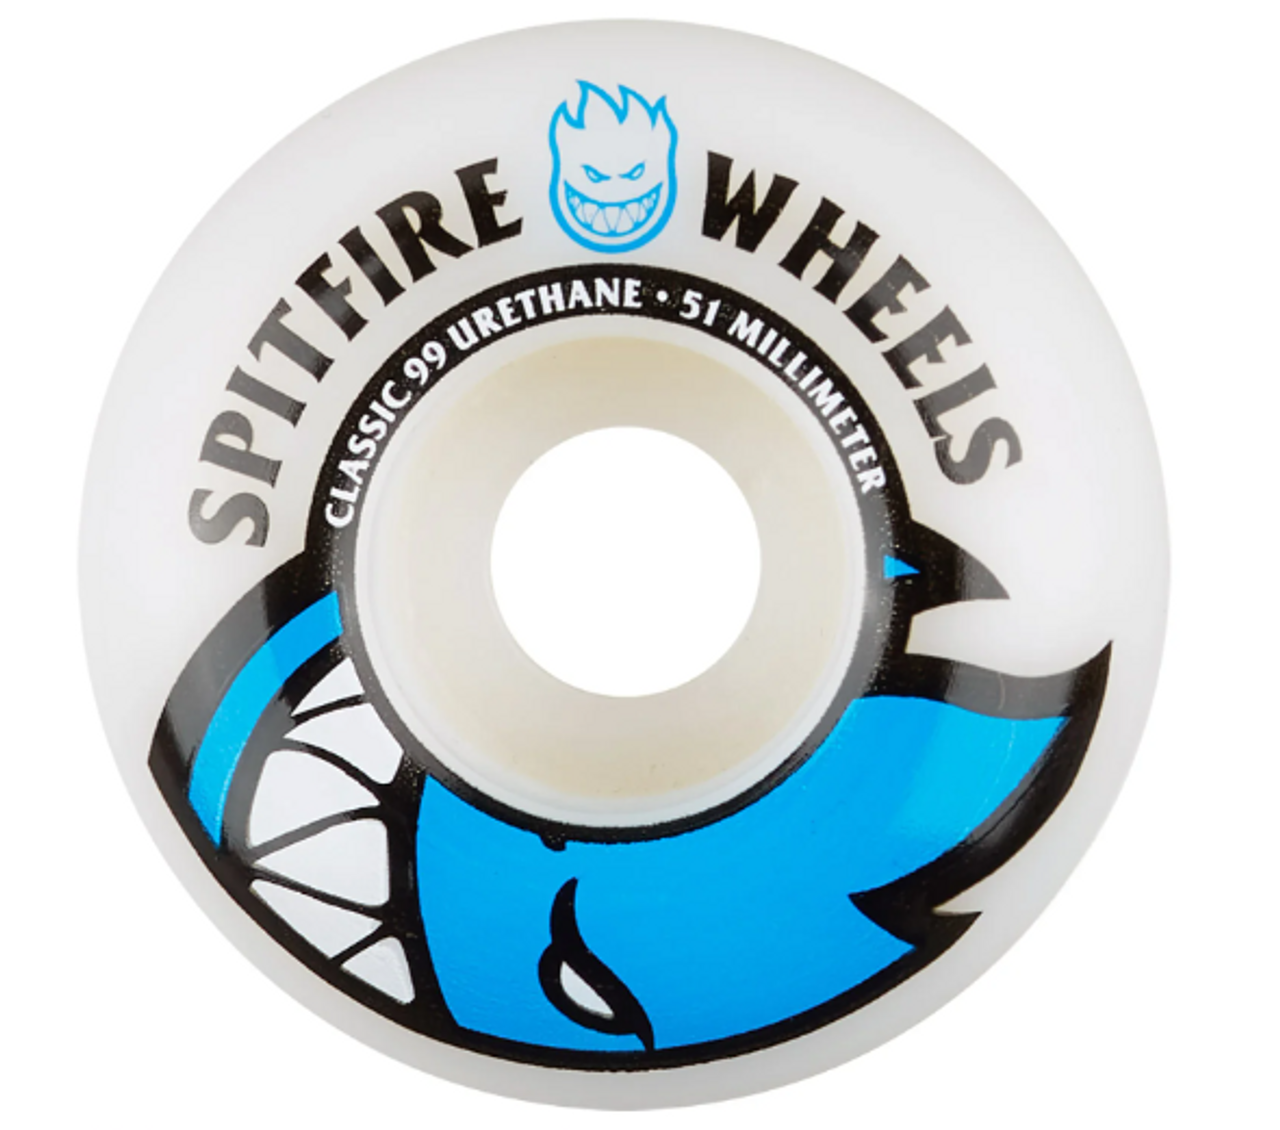 Spitfire Bighead Wheels Set White Blue 51mm/99d